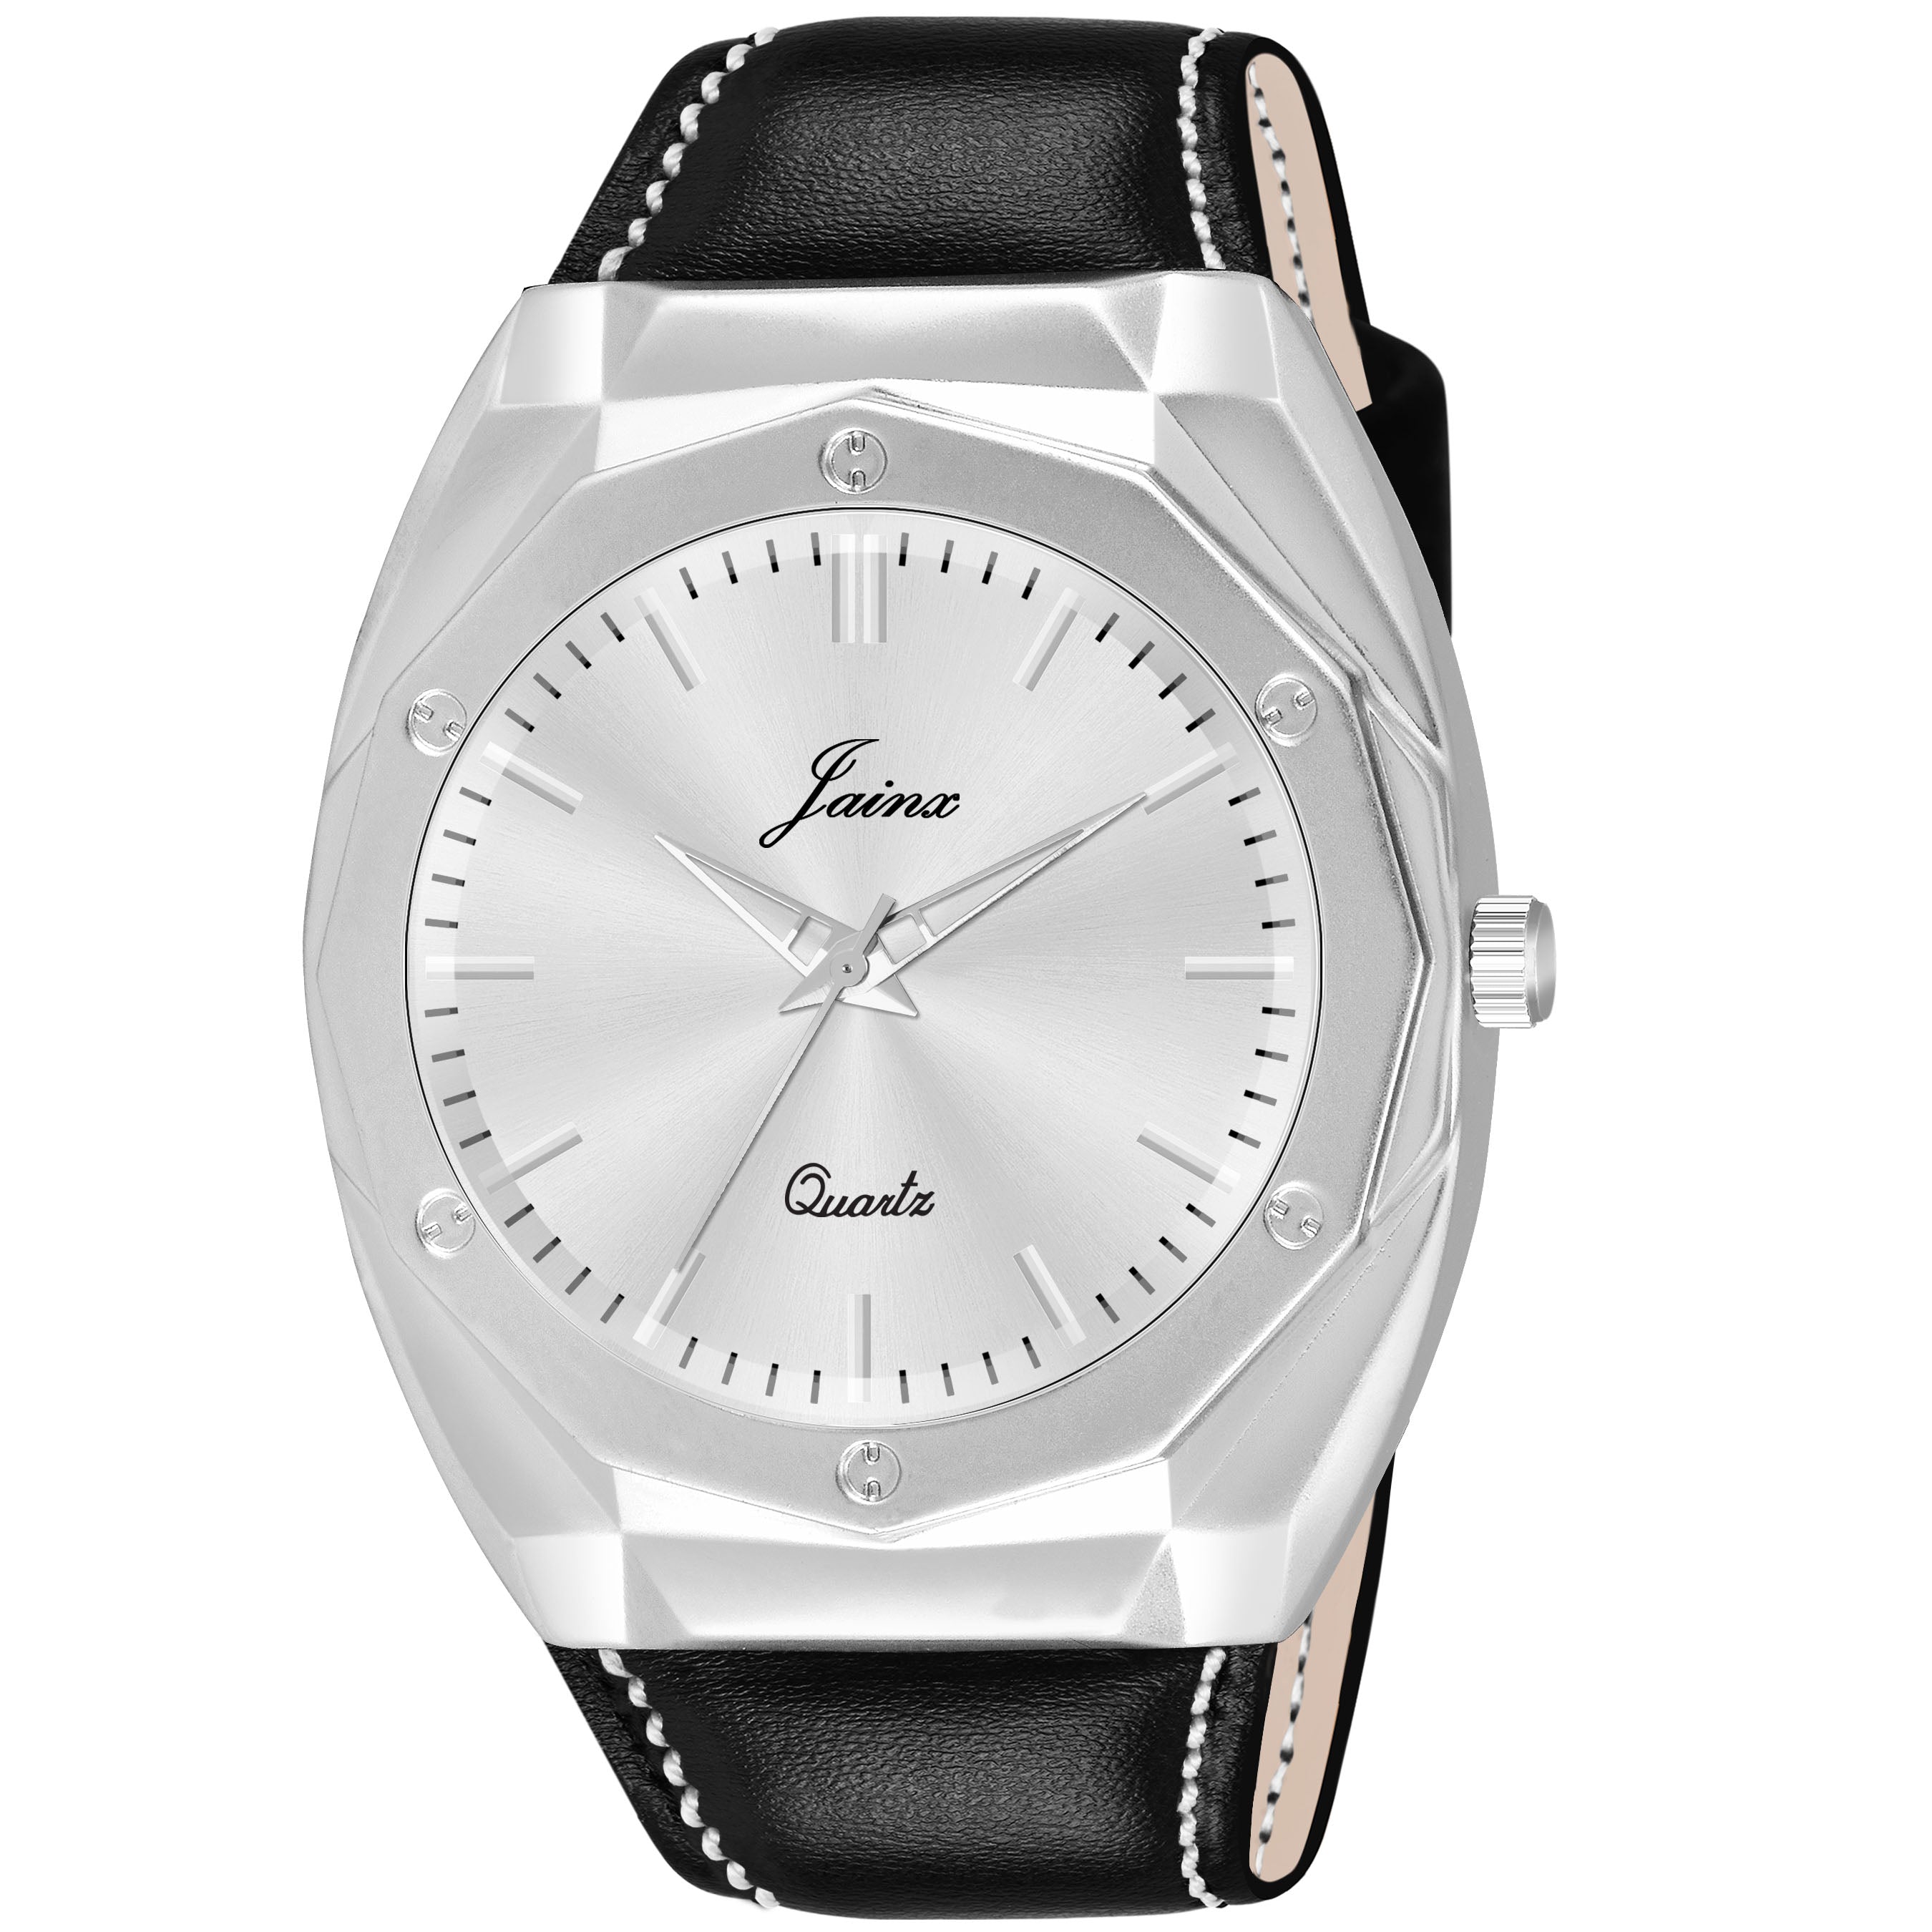 Jainx Silver Dial Black Leather Strap Watch For Men - JM7166 - Jainx Store